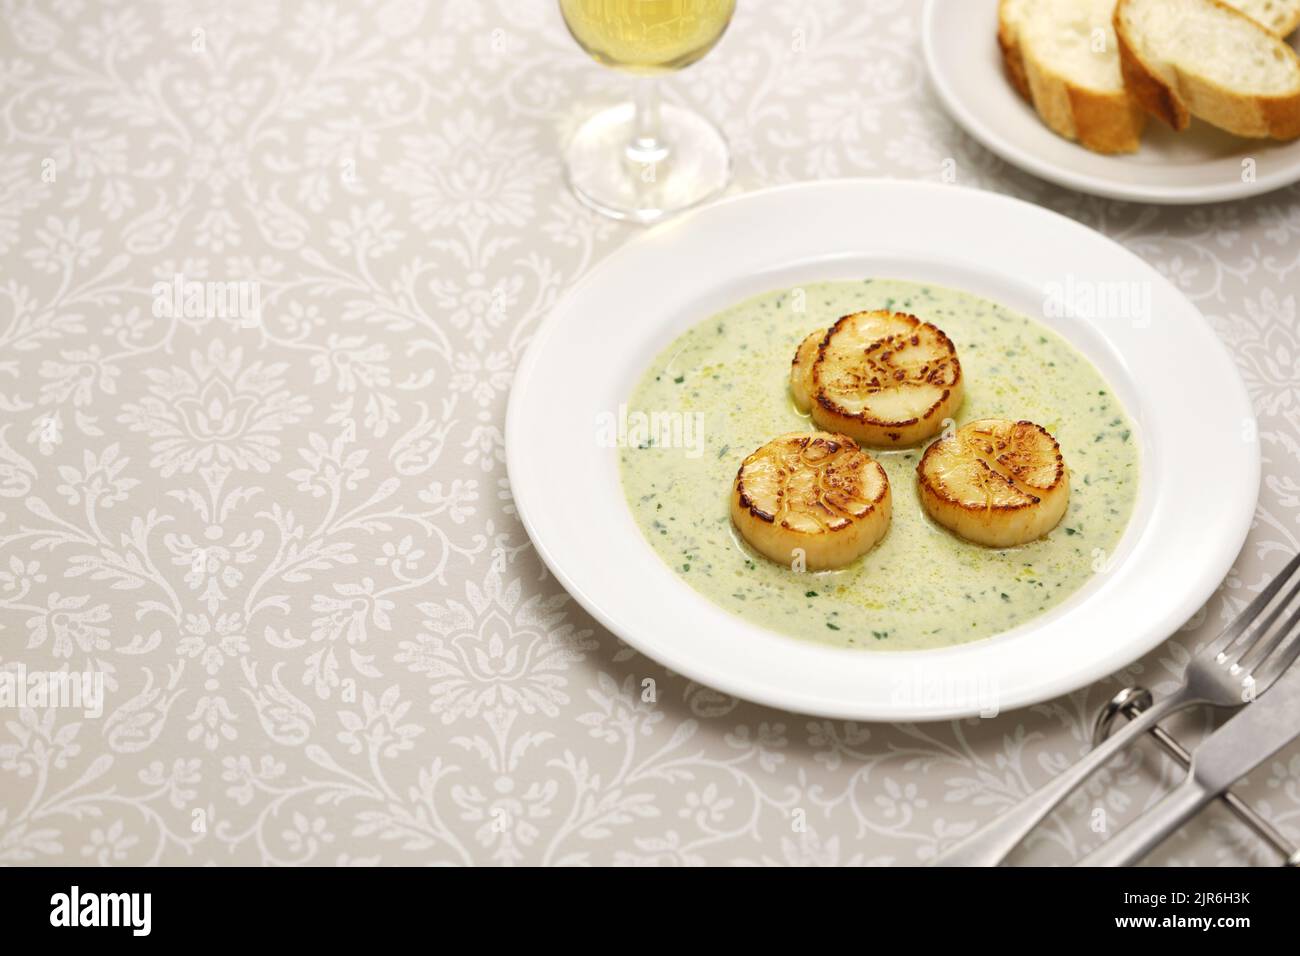 seared scallops, French cuisine Stock Photo